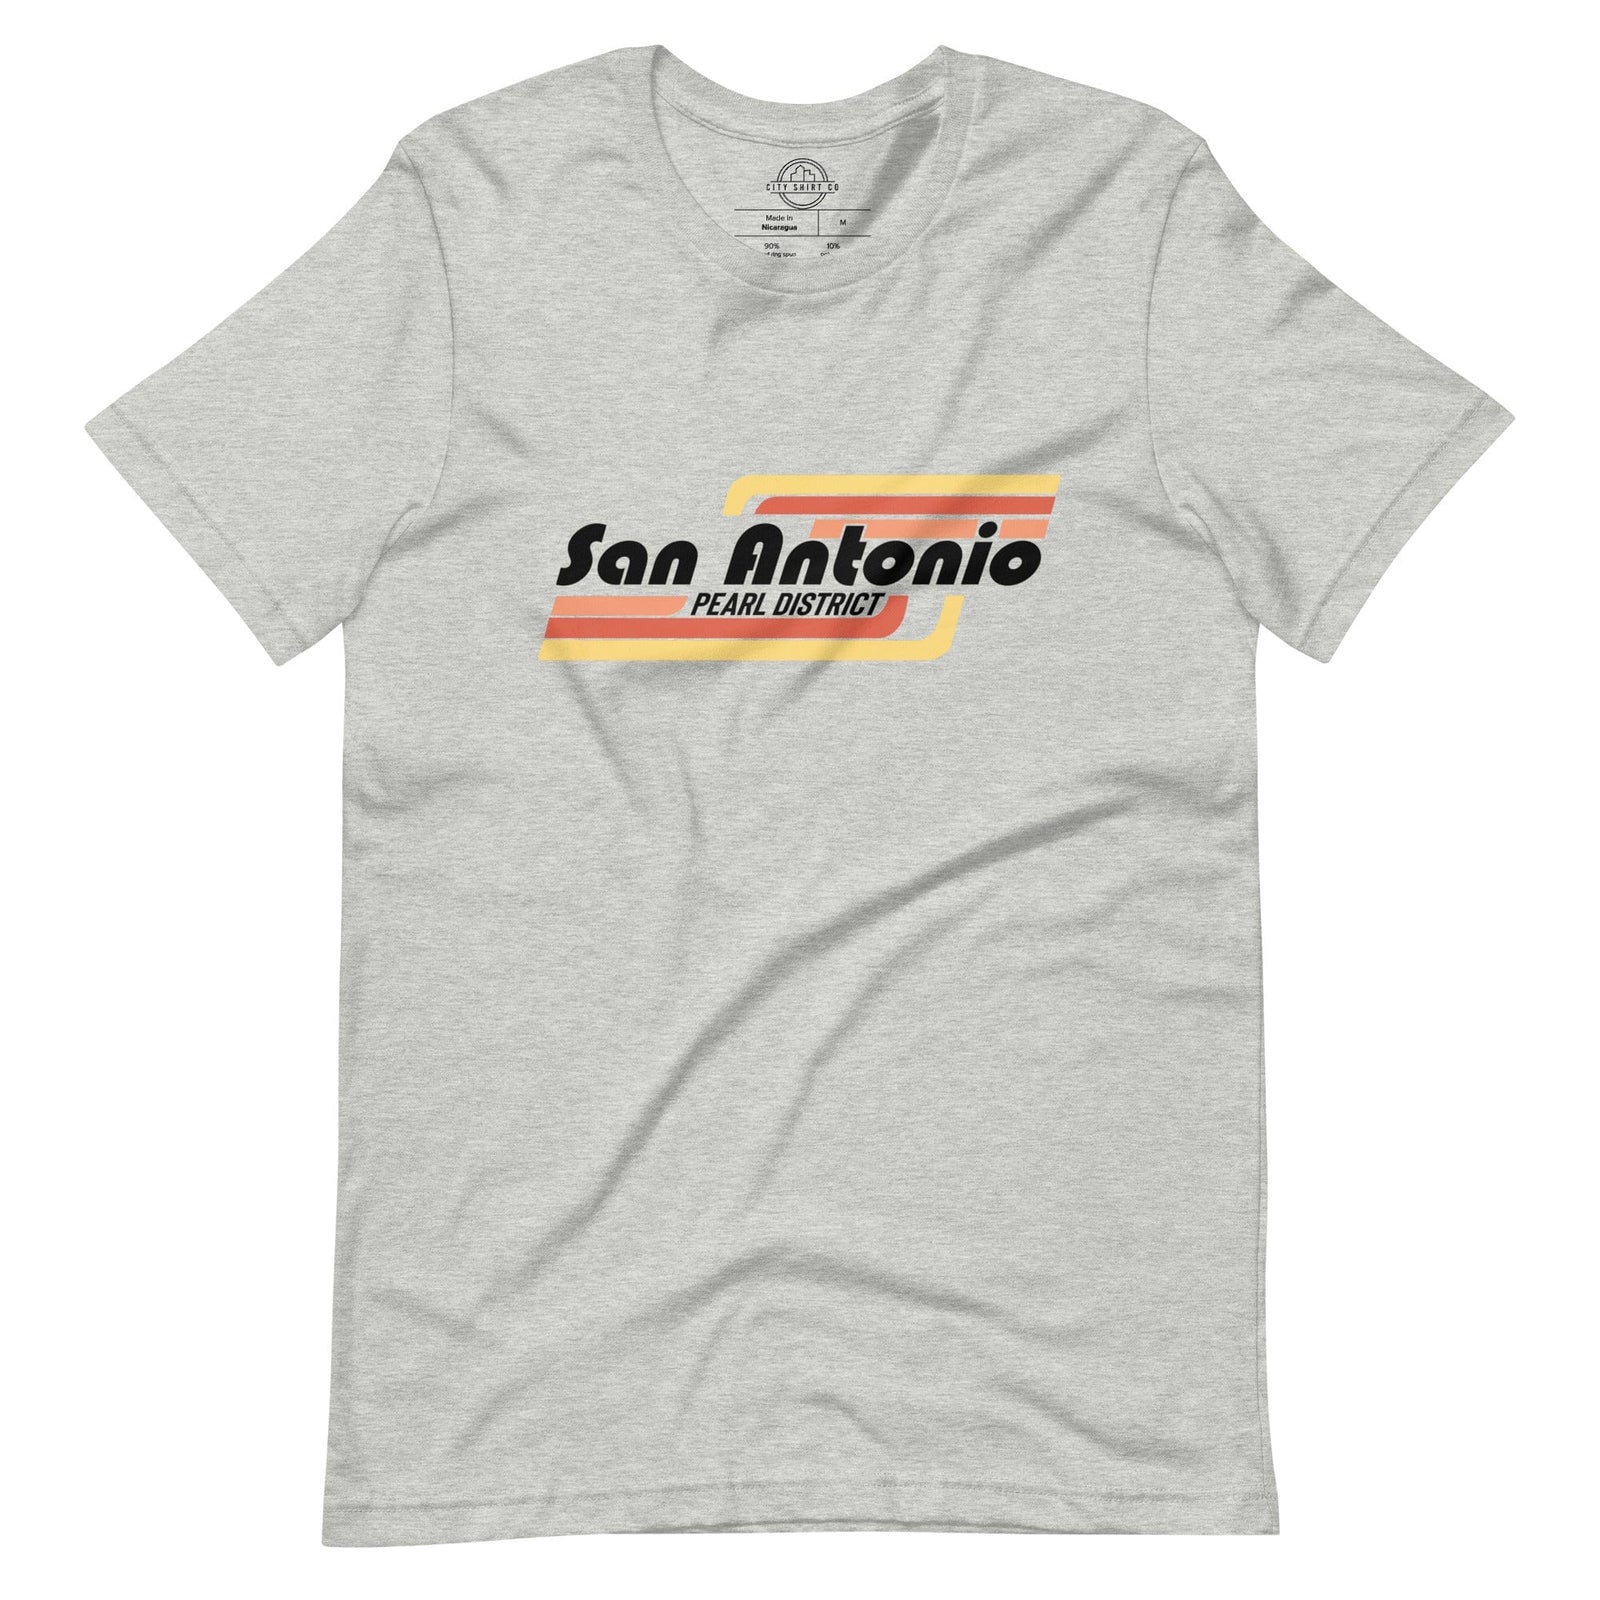 City Shirt Co San Antonio | Pearl District T Shirt Athletic Heather / XS